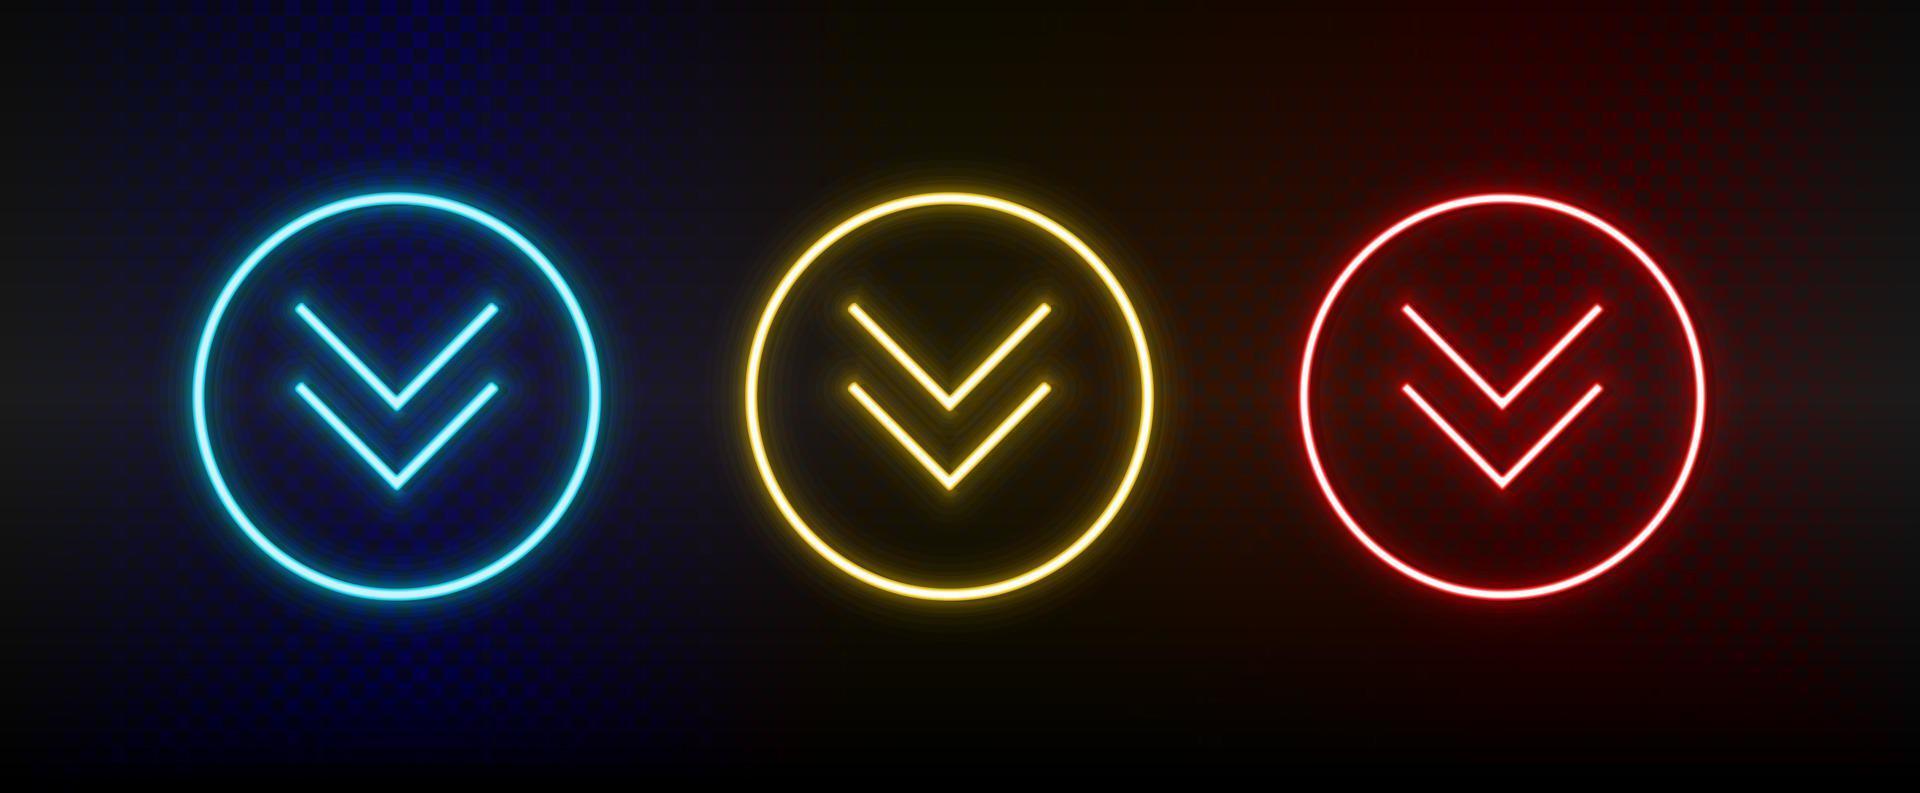 Neon icons. Ui arrow. Set of red, blue, yellow neon vector icon on darken background